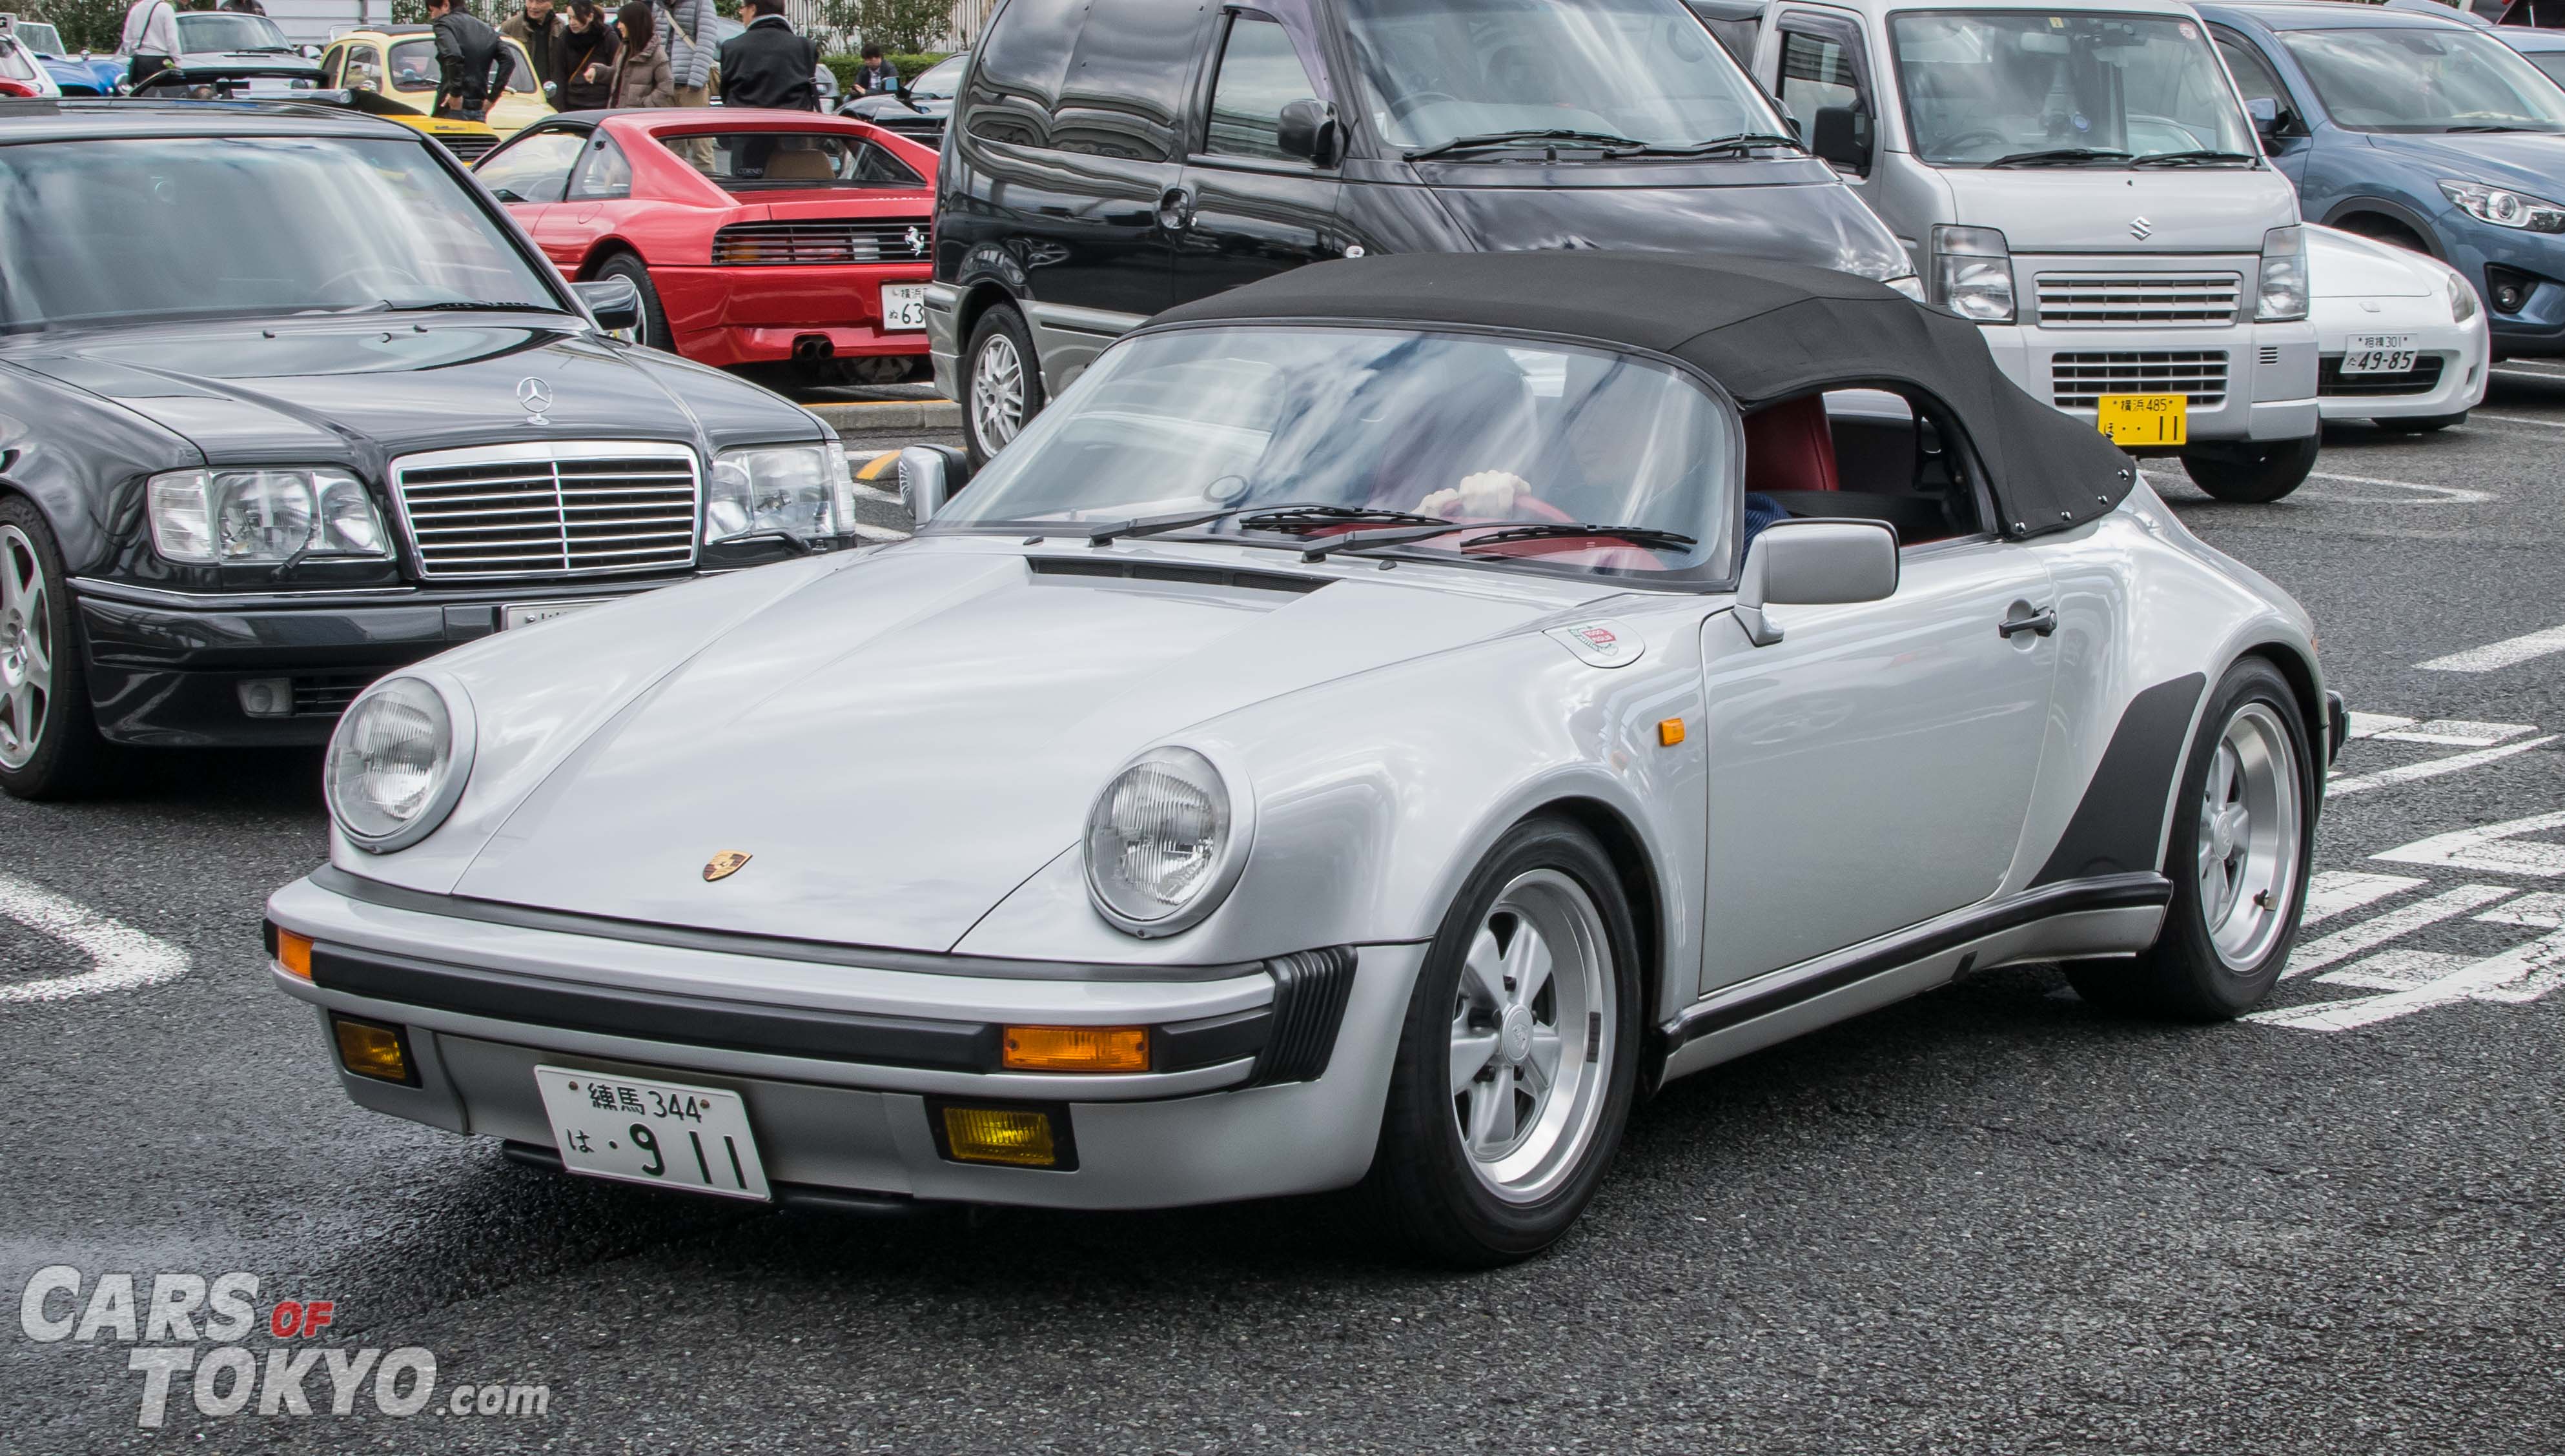 Cars of Tokyo Classic Porsche 911 Speedster (930)